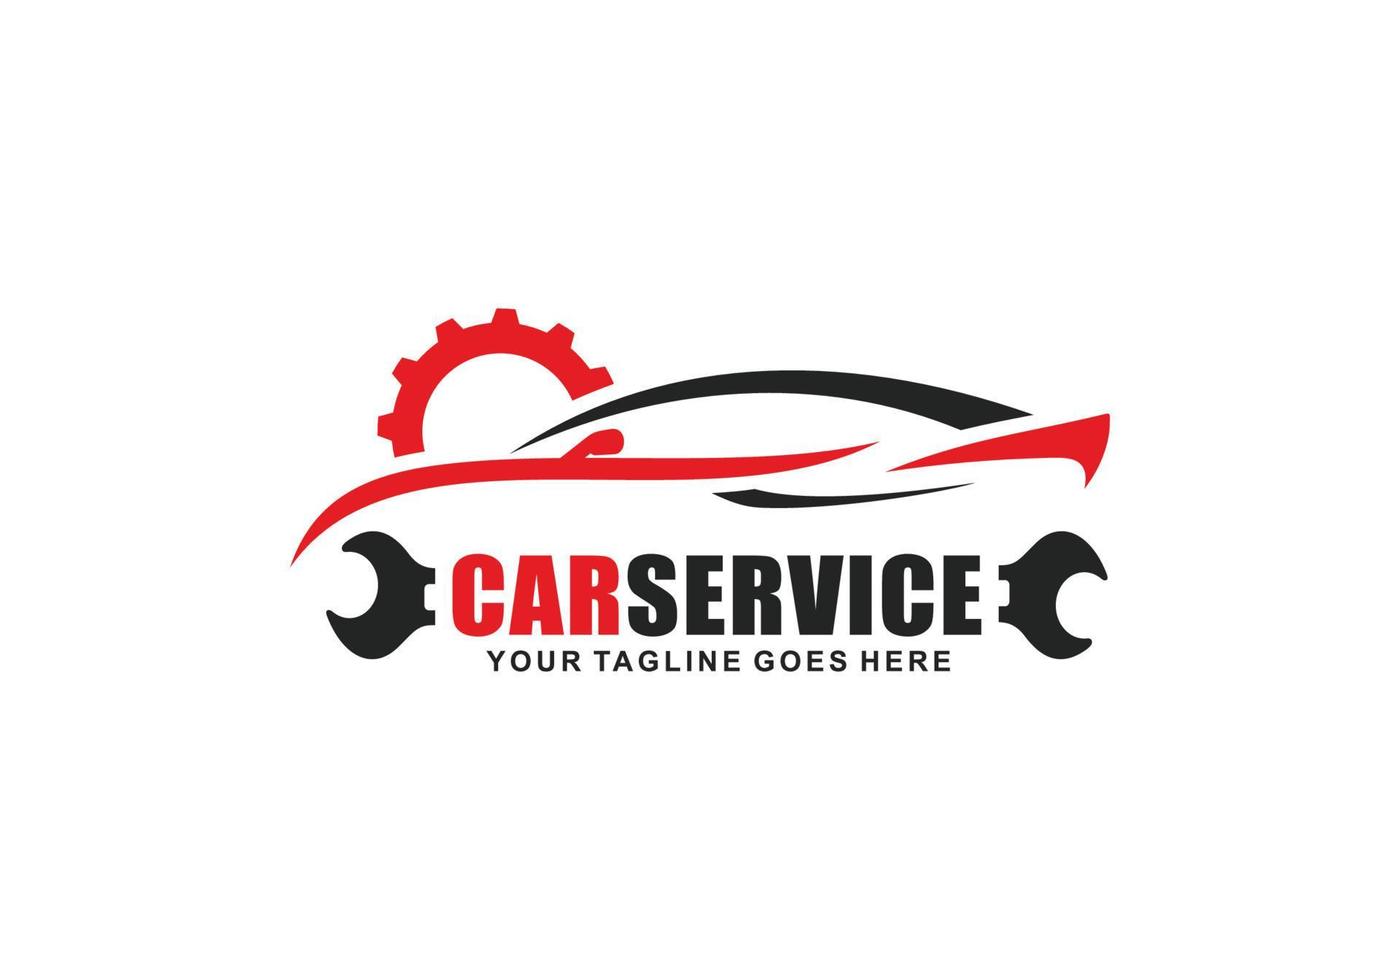 Car service logo design vector illustration. Car repair logo